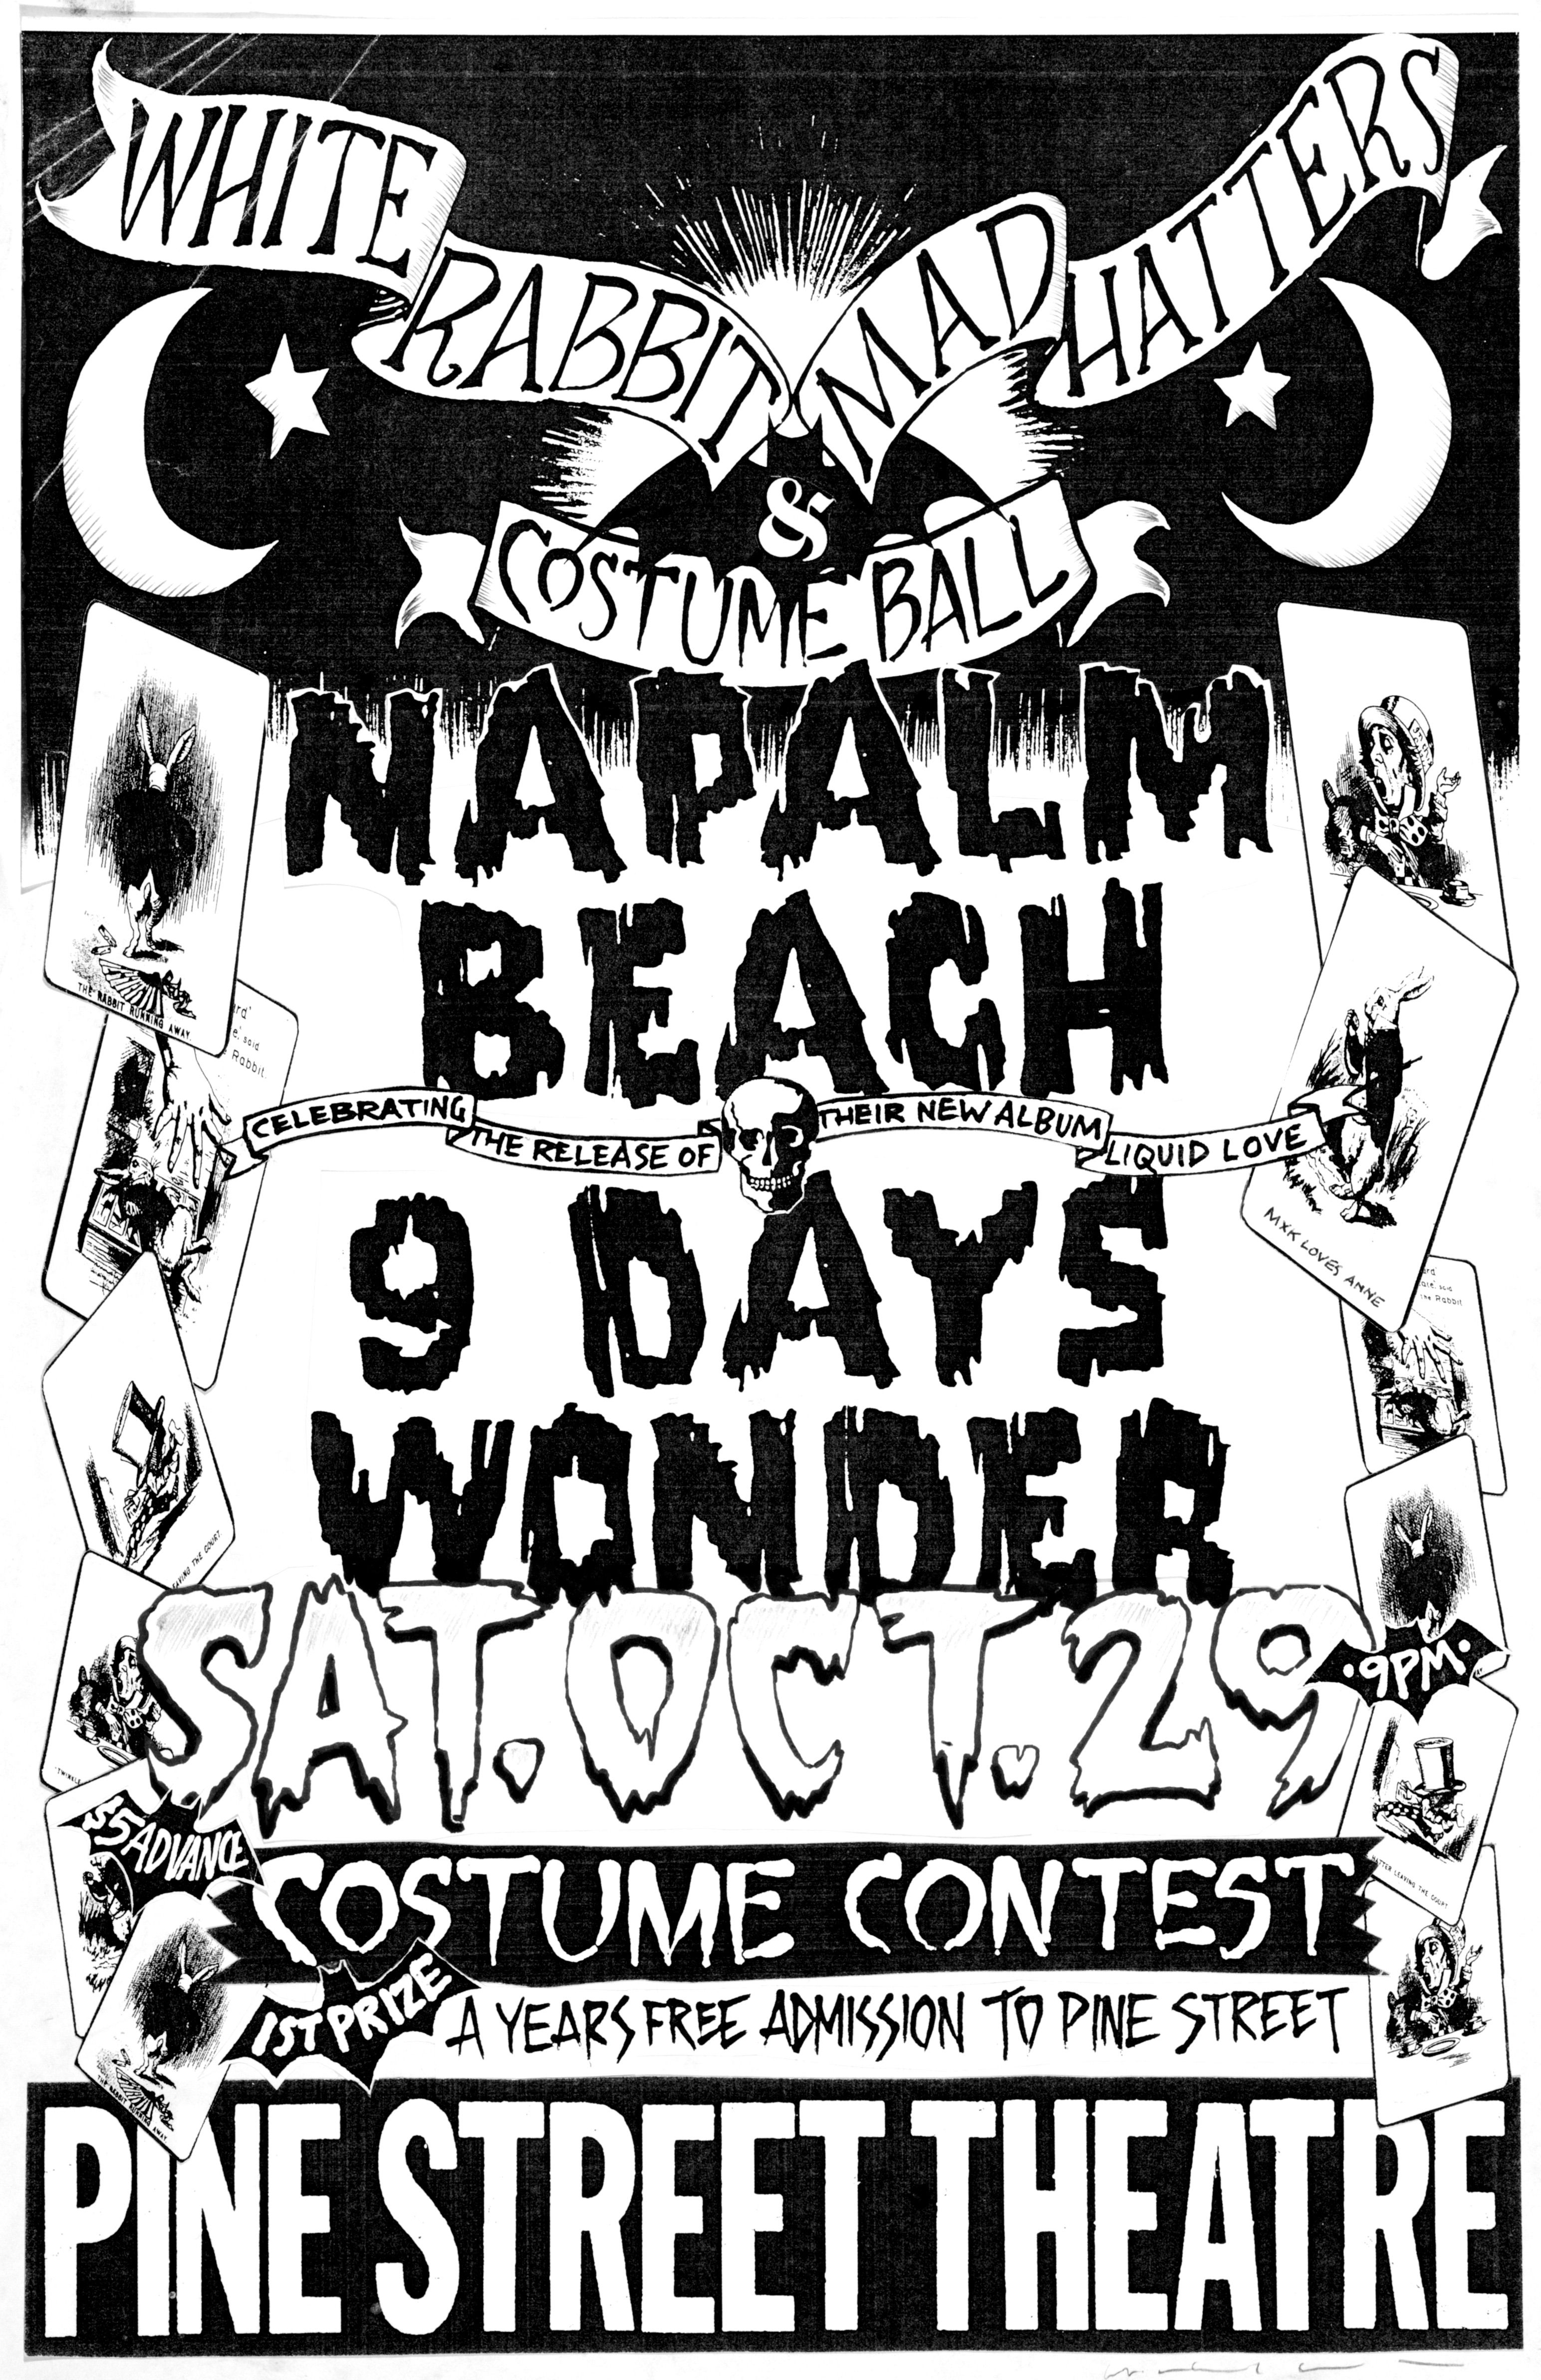 MXP-140.8 Napalm Beach 1988 Pine Street Theatre  Oct 29 Concert Poster